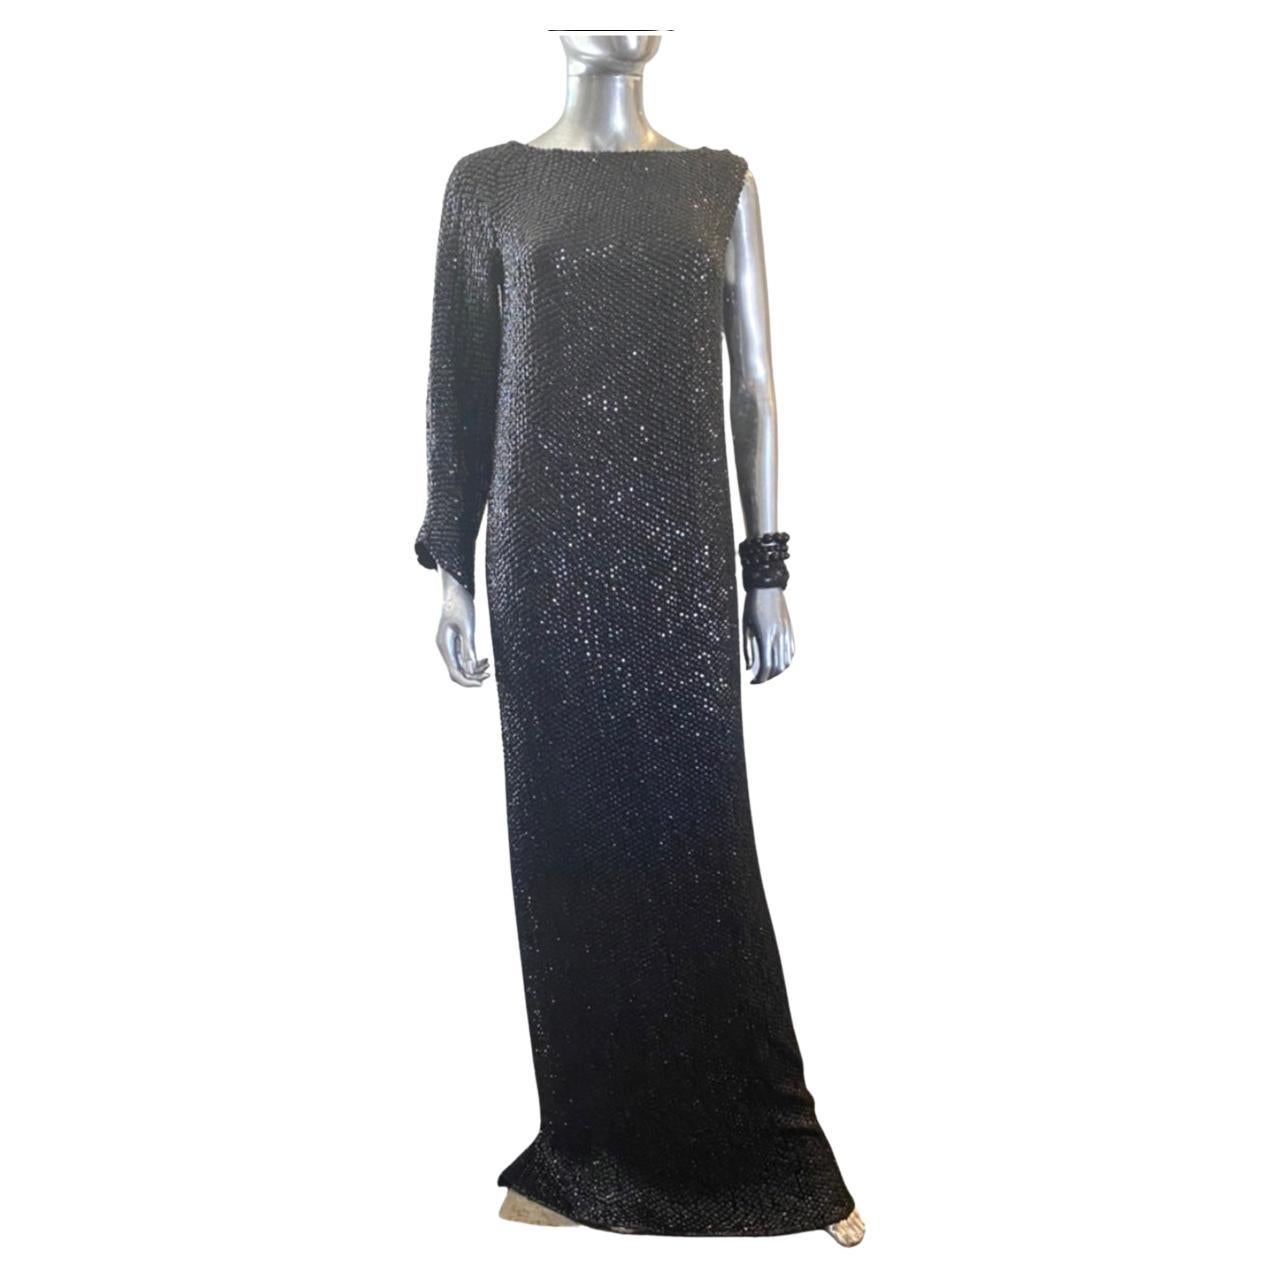 Escada Spectacular One Sleeve Black Jet Hand-Beaded Dress NWT Size 6 For Sale